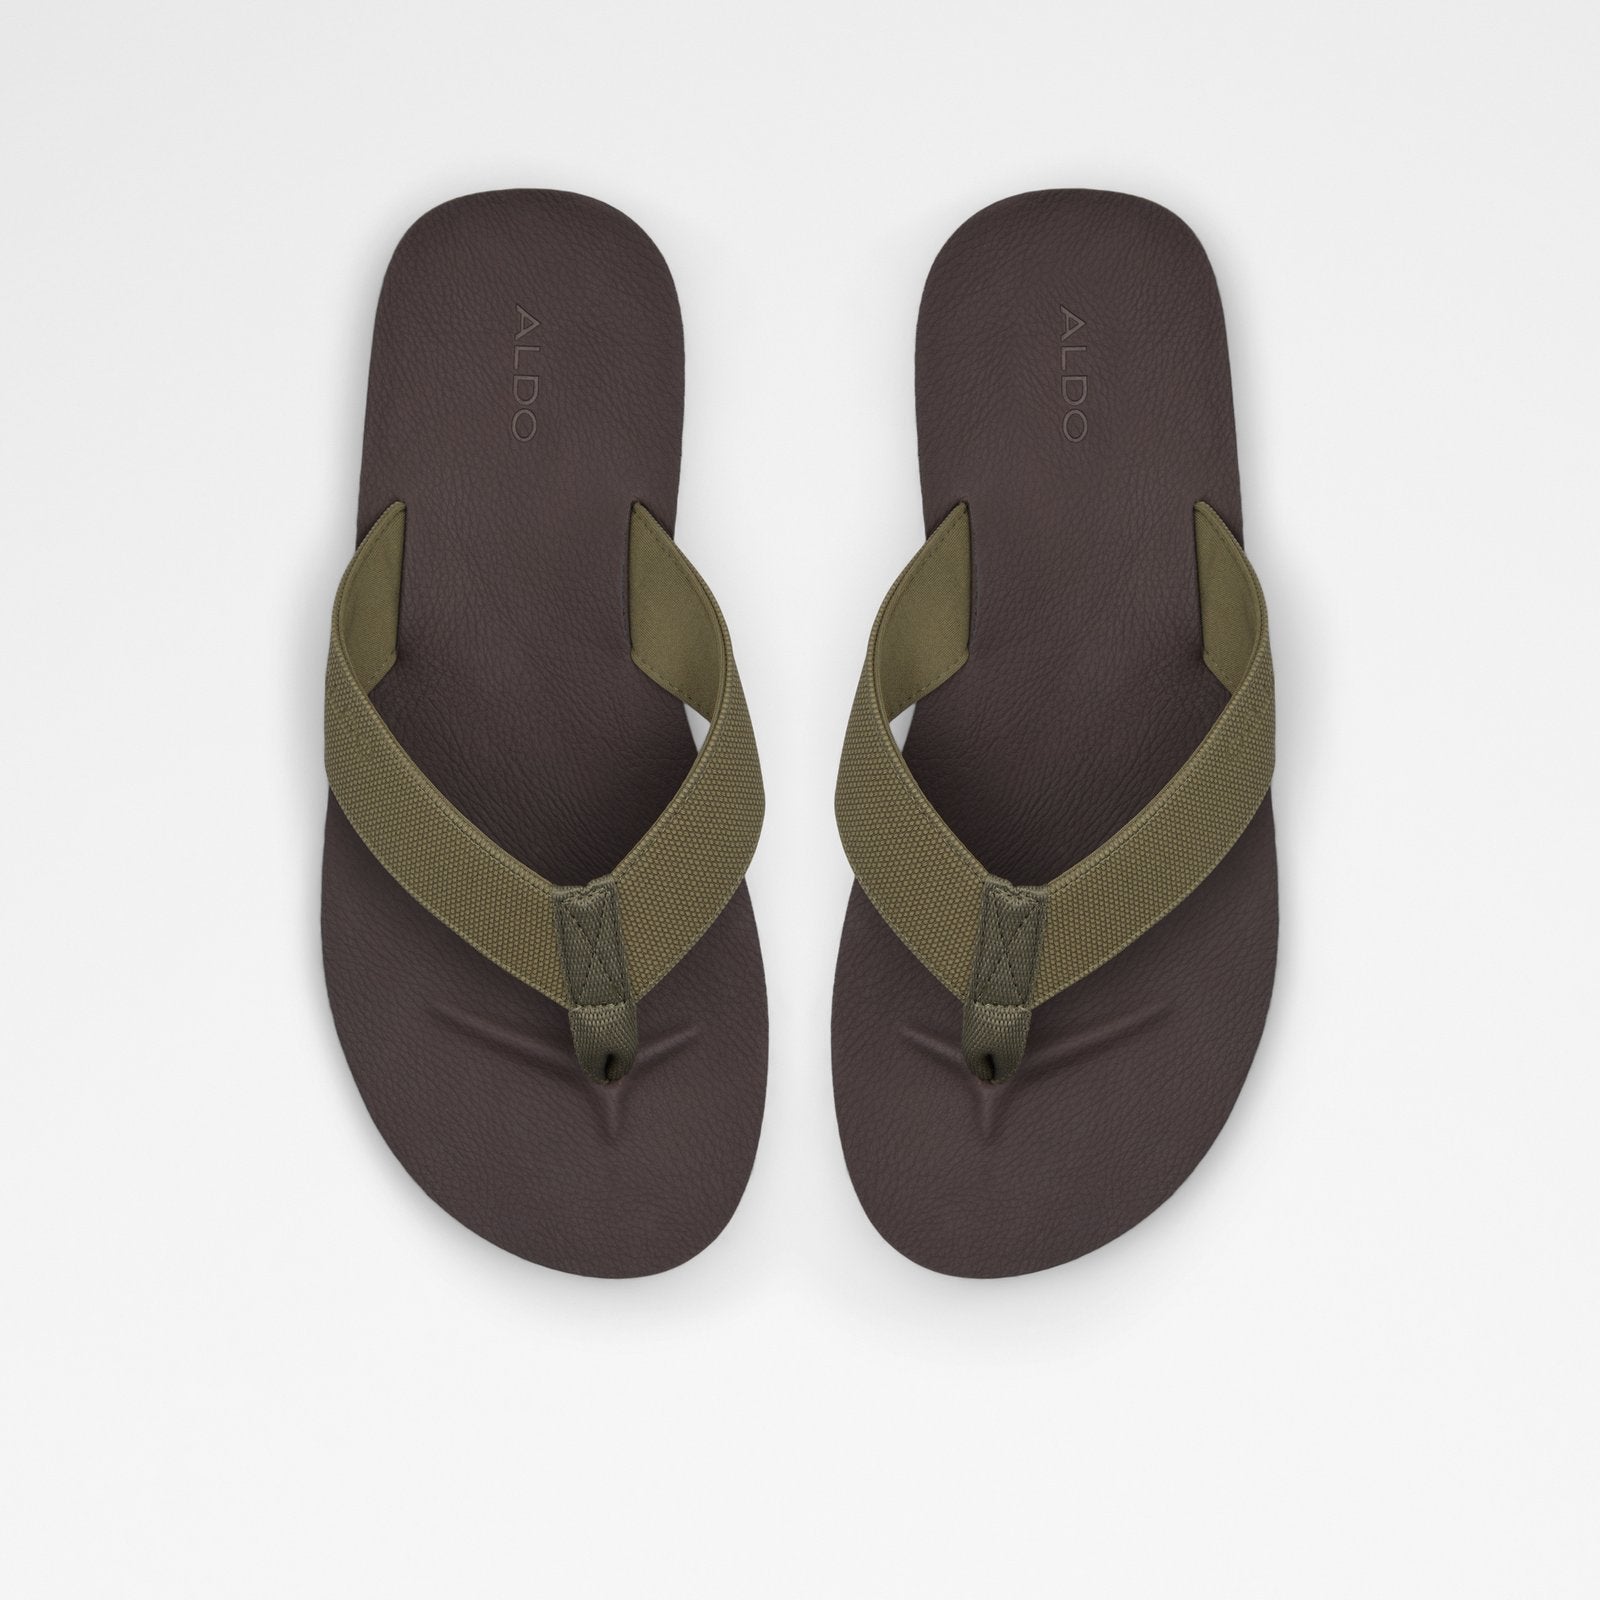 Weallere / Flat Sandals Men Shoes - Khaki - ALDO KSA